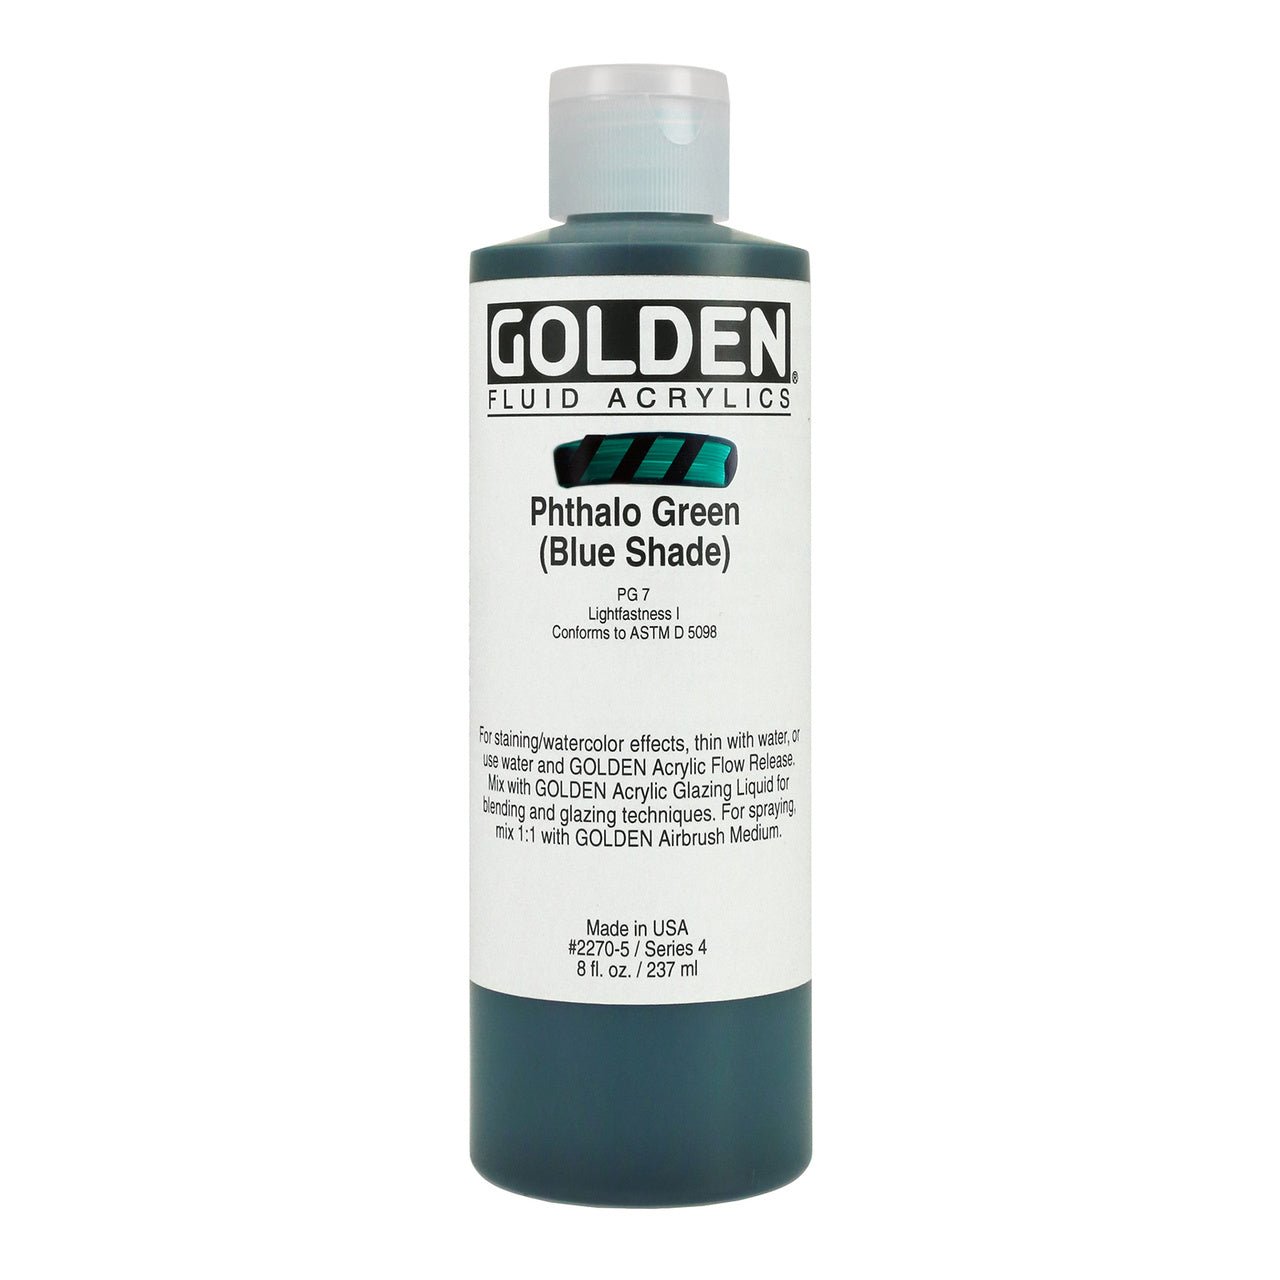 Golden Fluid Acrylic Phthalo Green (blue shade) 8 oz - merriartist.com